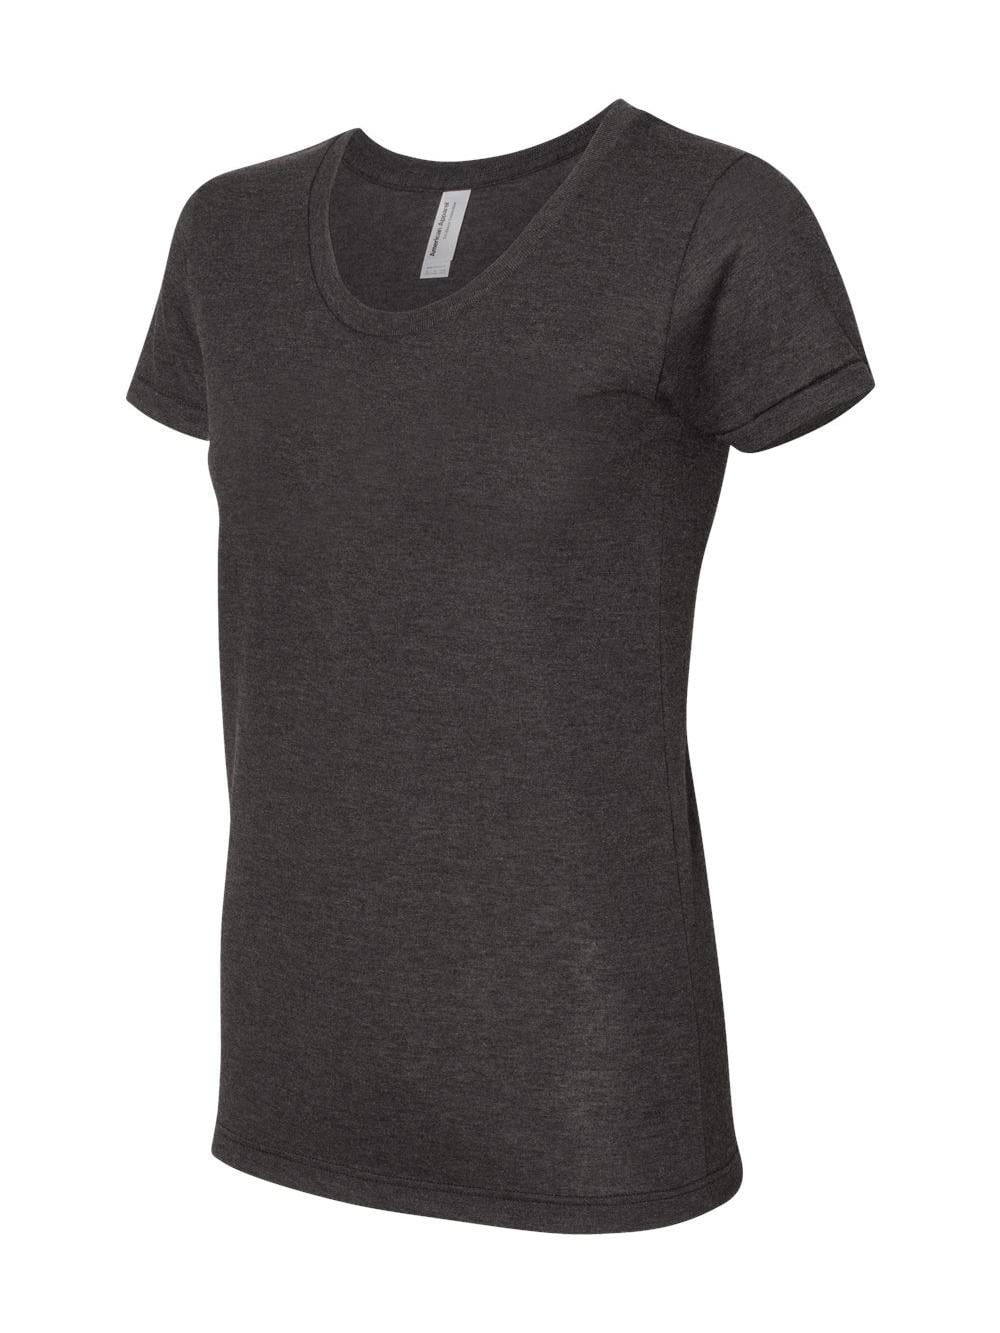 American Apparel Womens/Ladies Triblend T-Shirt